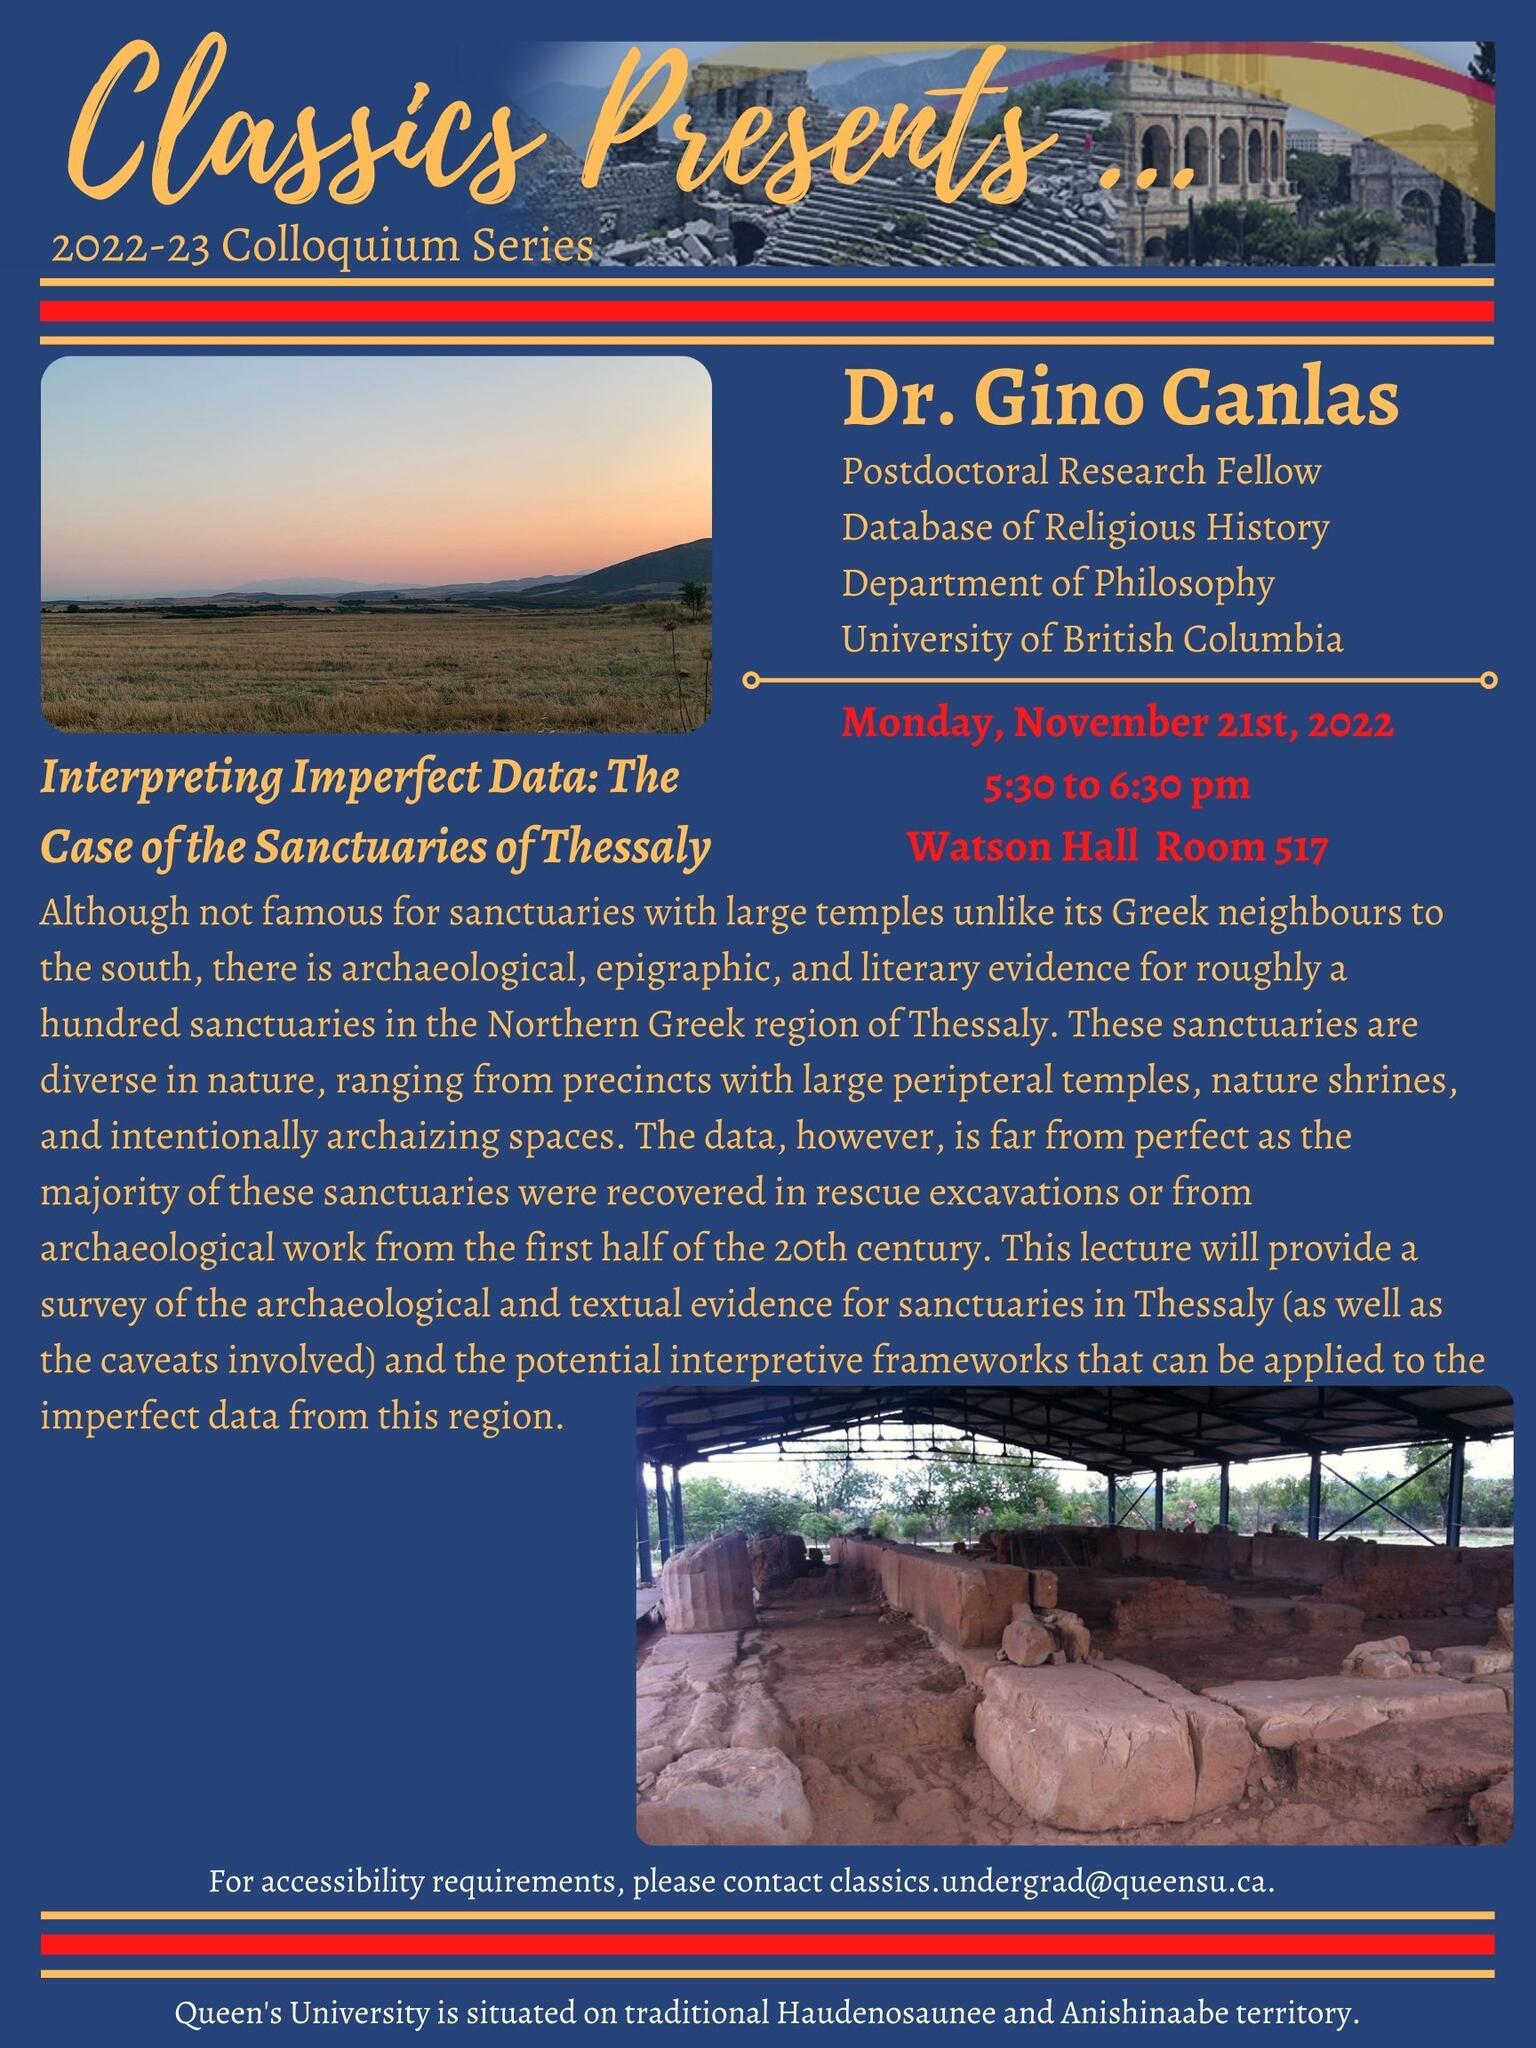 Classics Presents Dr. Gino Canlas